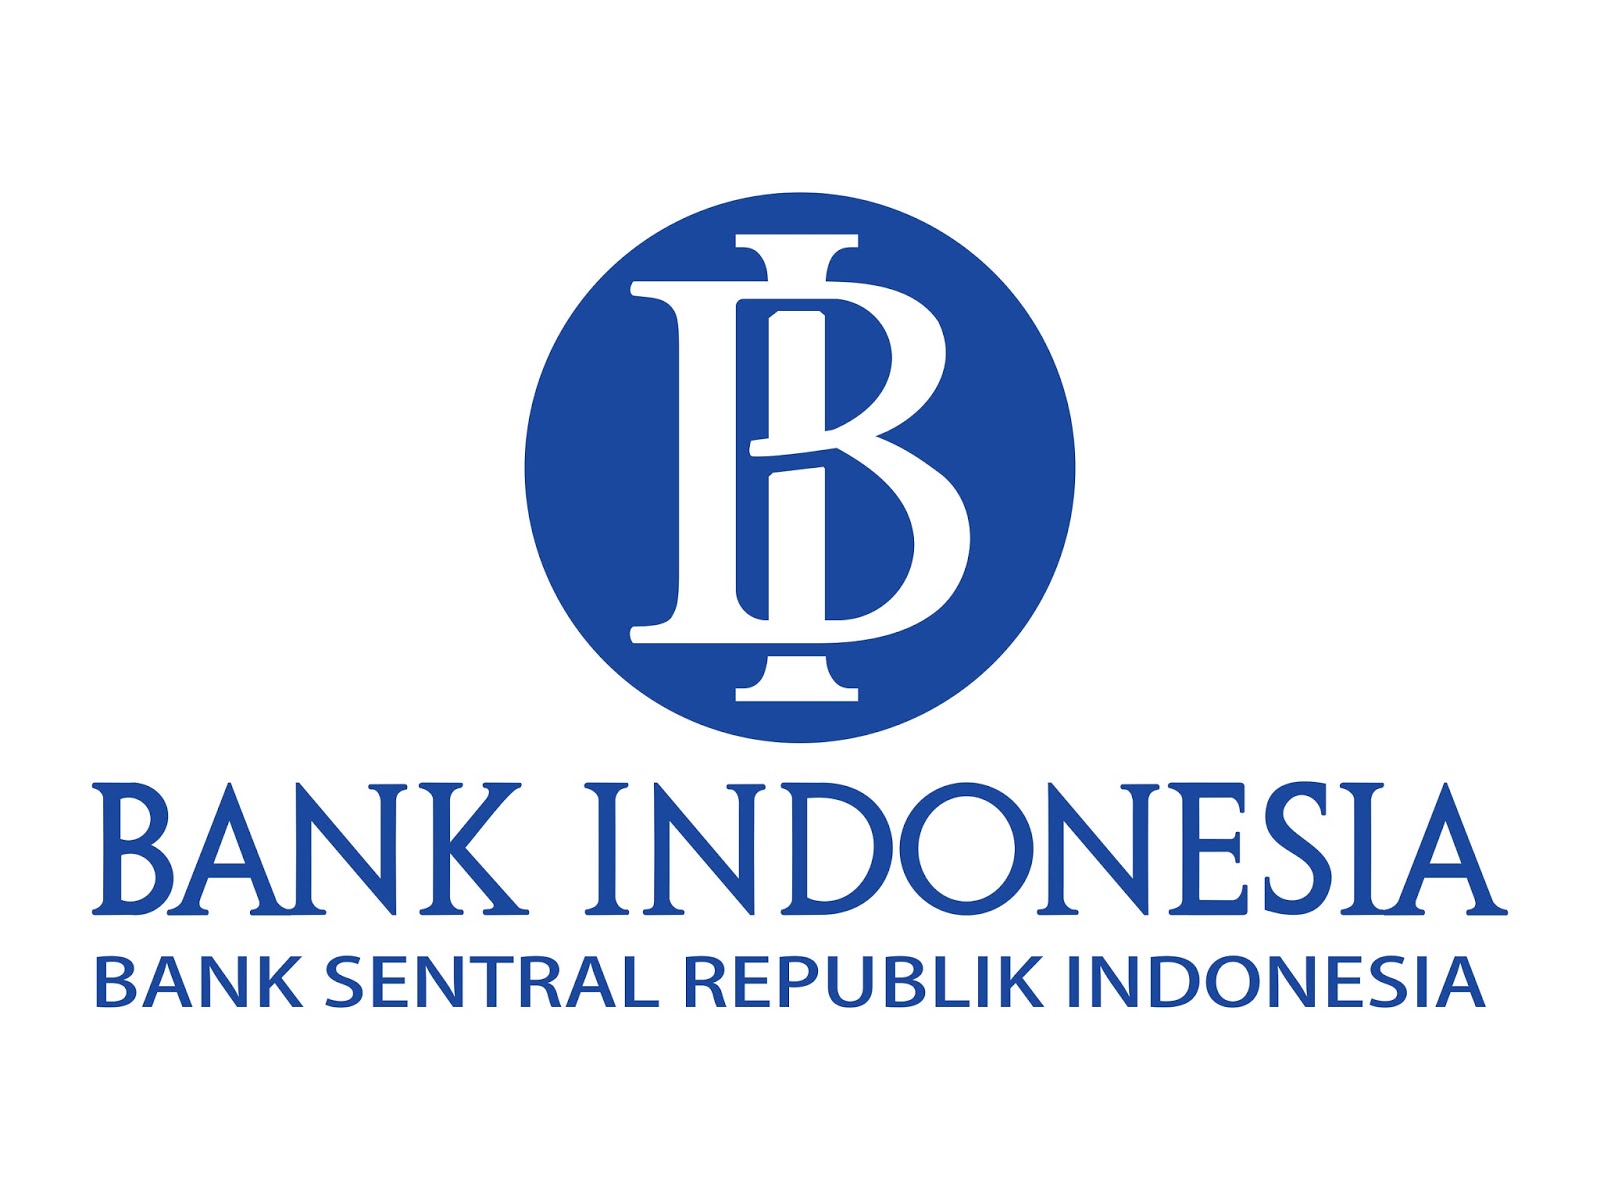 Sumber gambar : Bank Indonesia